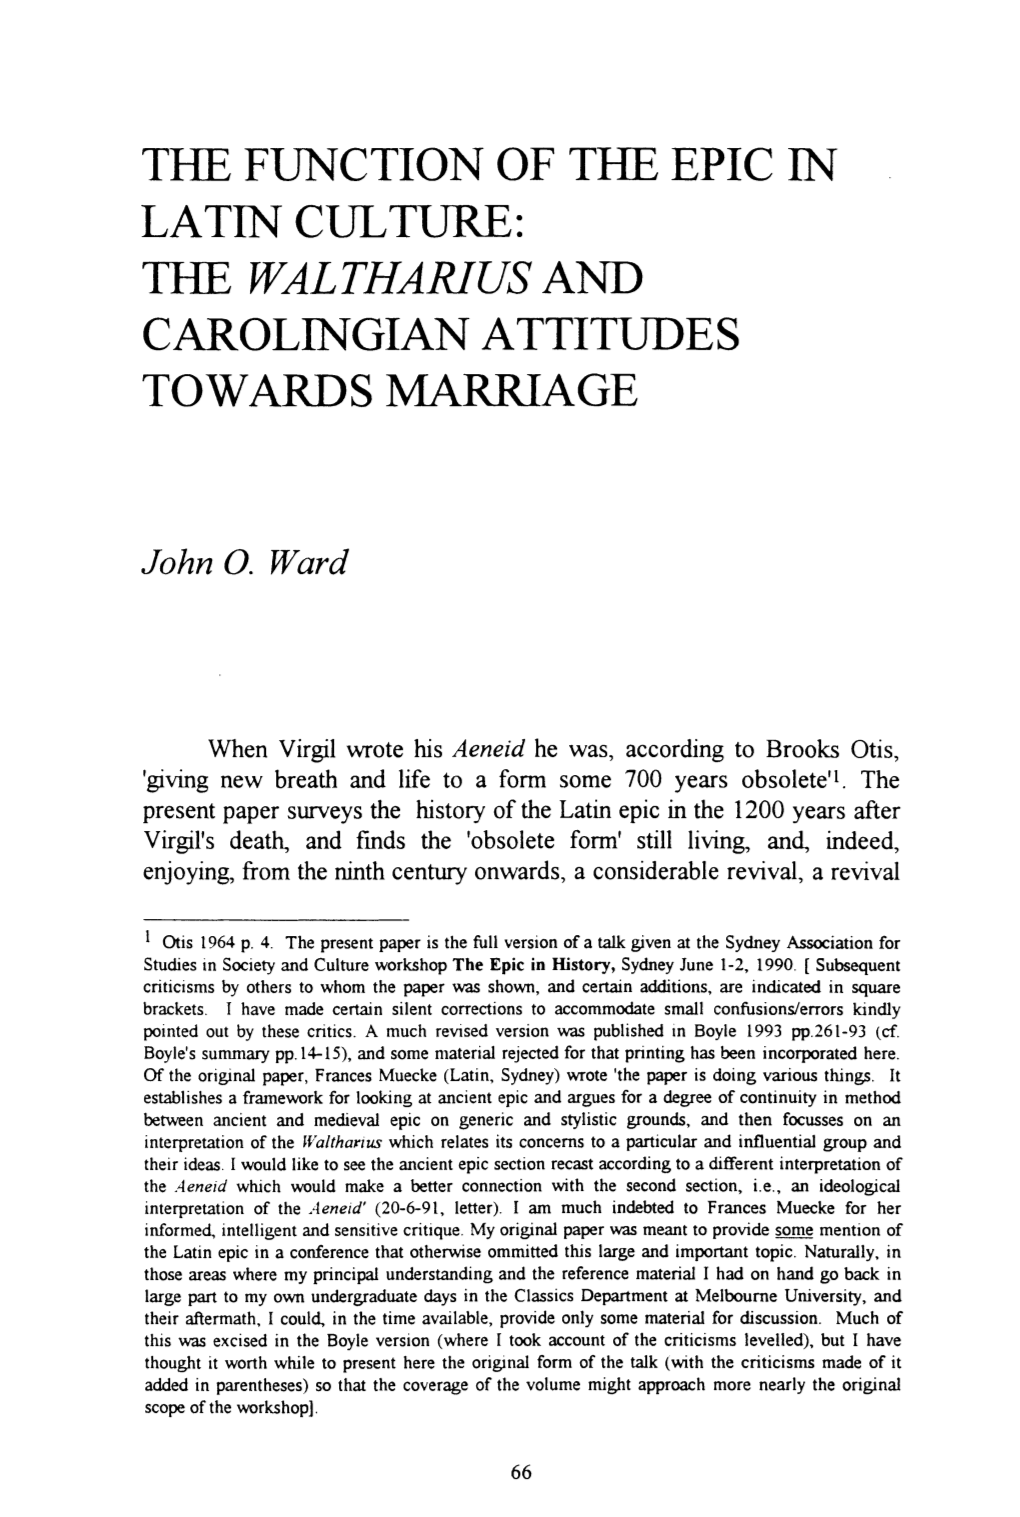 The Waltharius and Carolingian Attitudes Towards Marriage